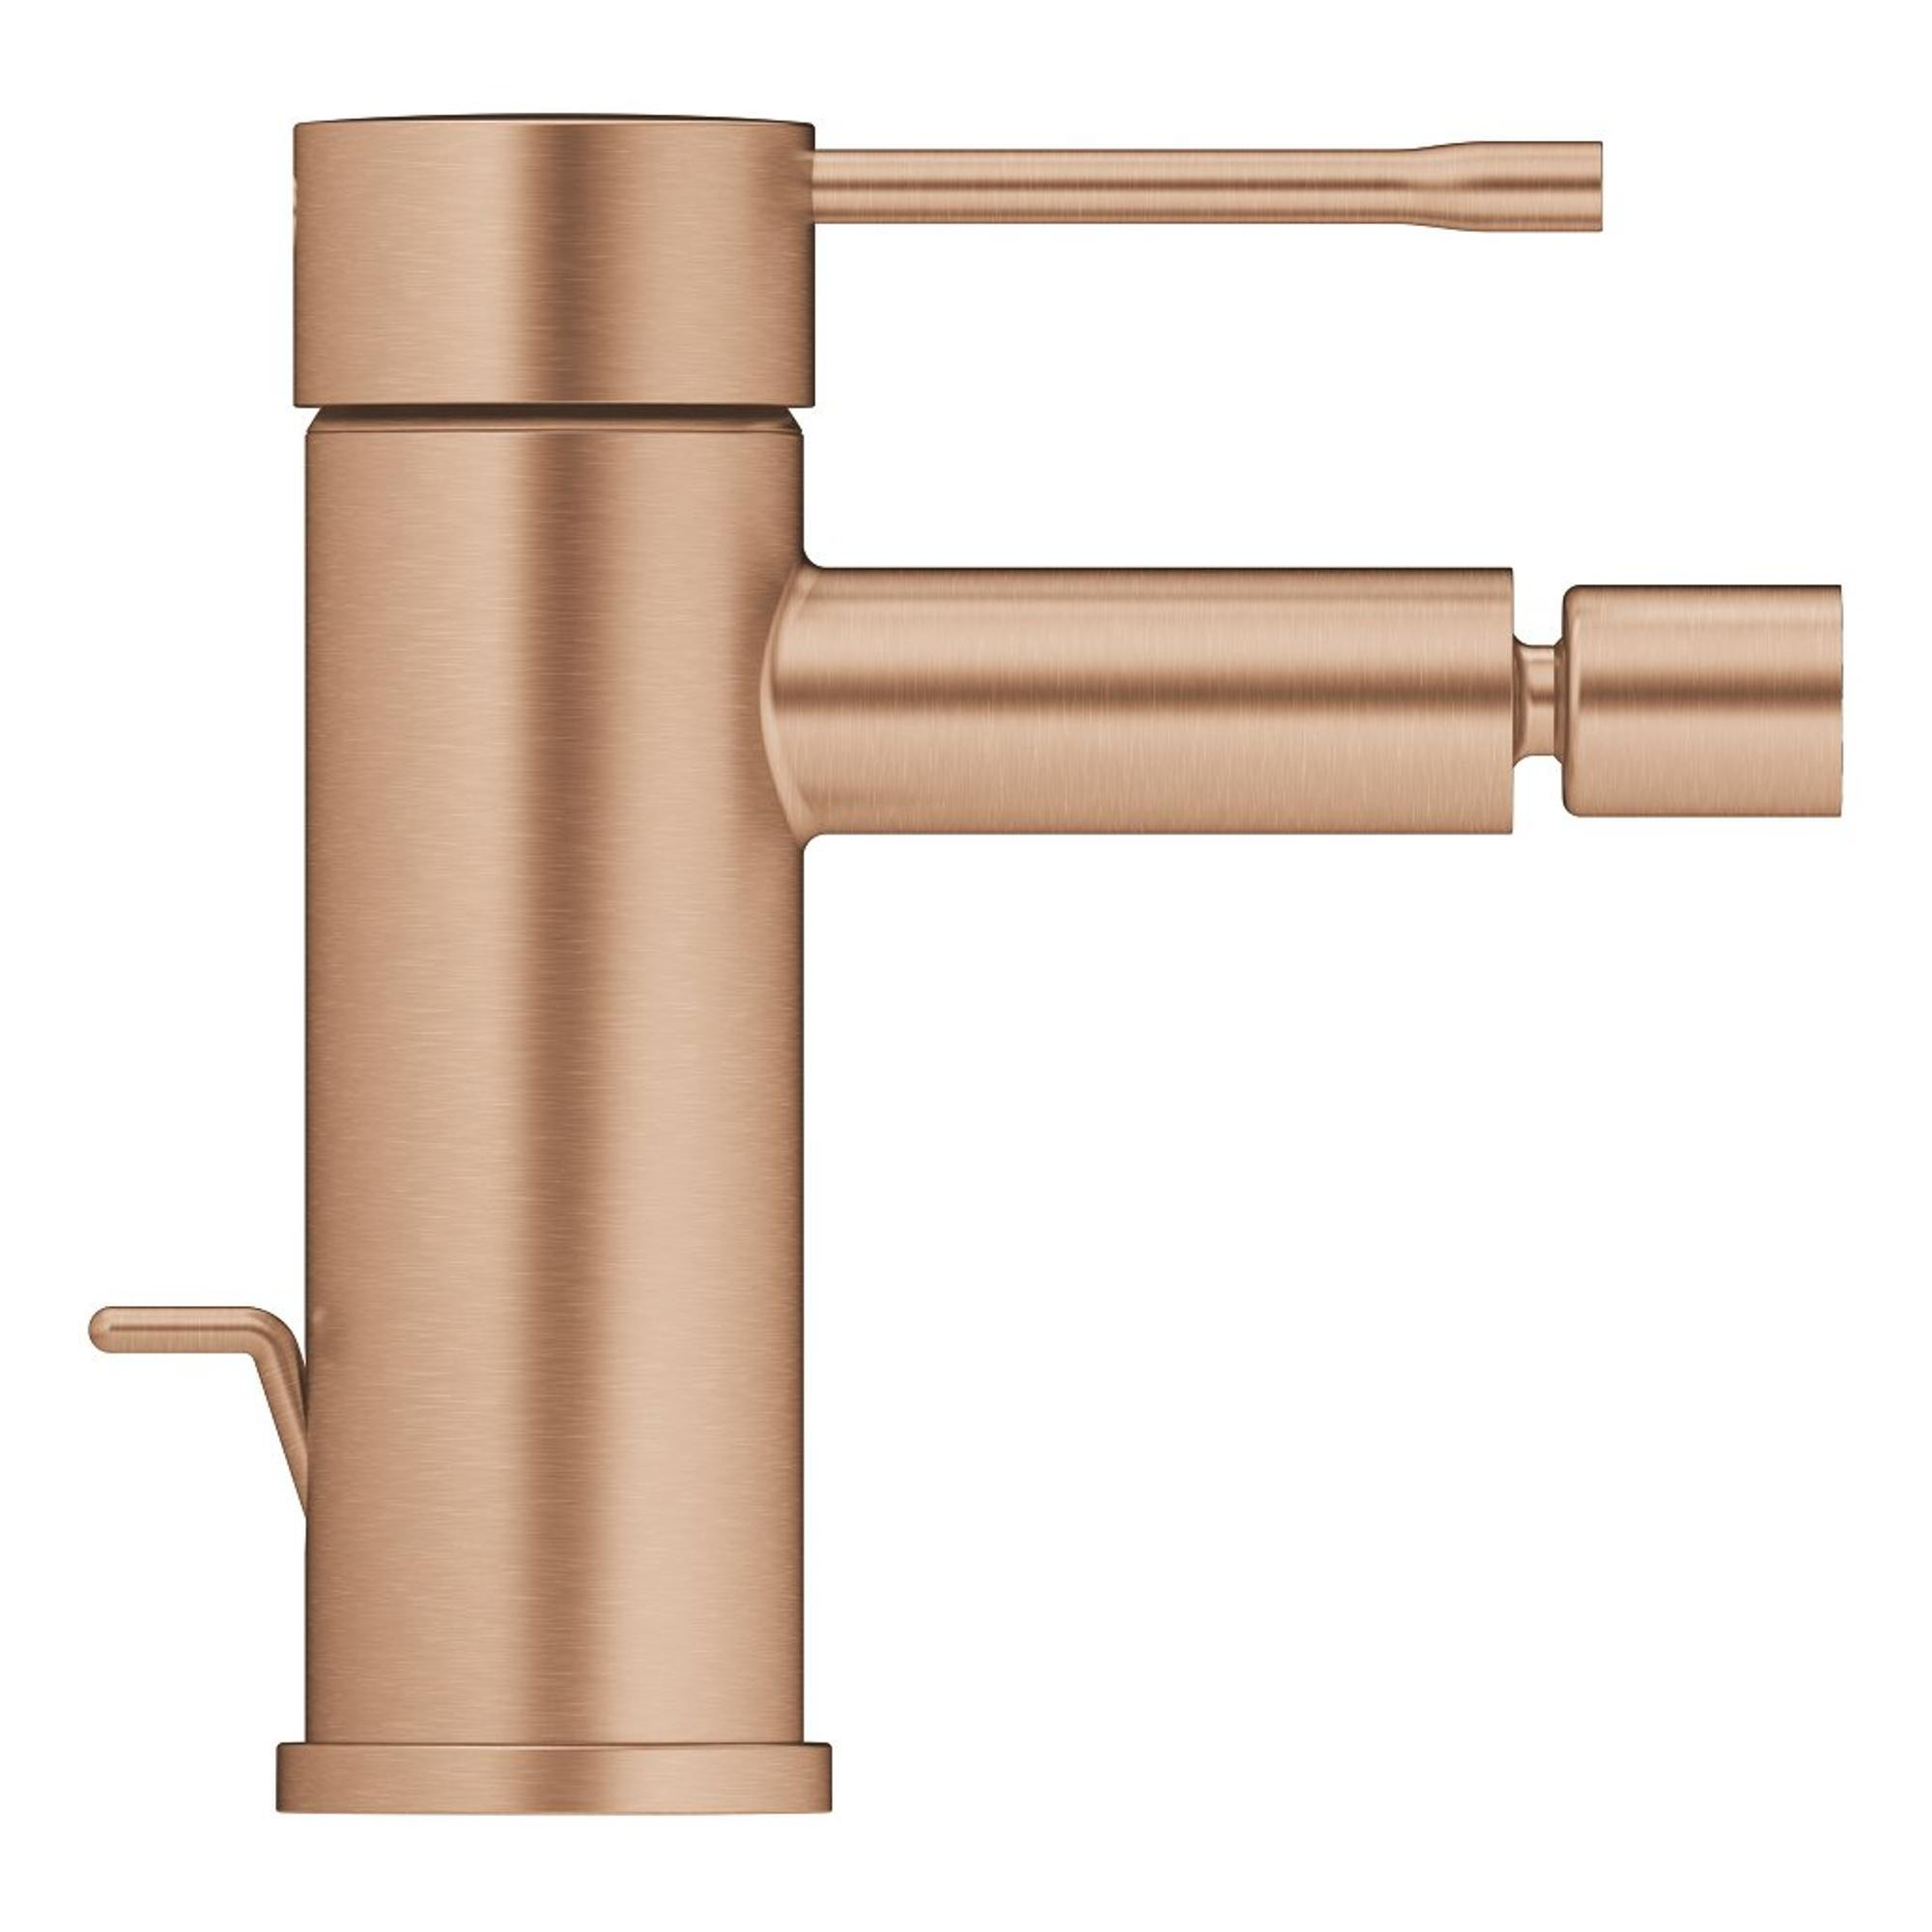 /440/robinet-a-essence-metalli